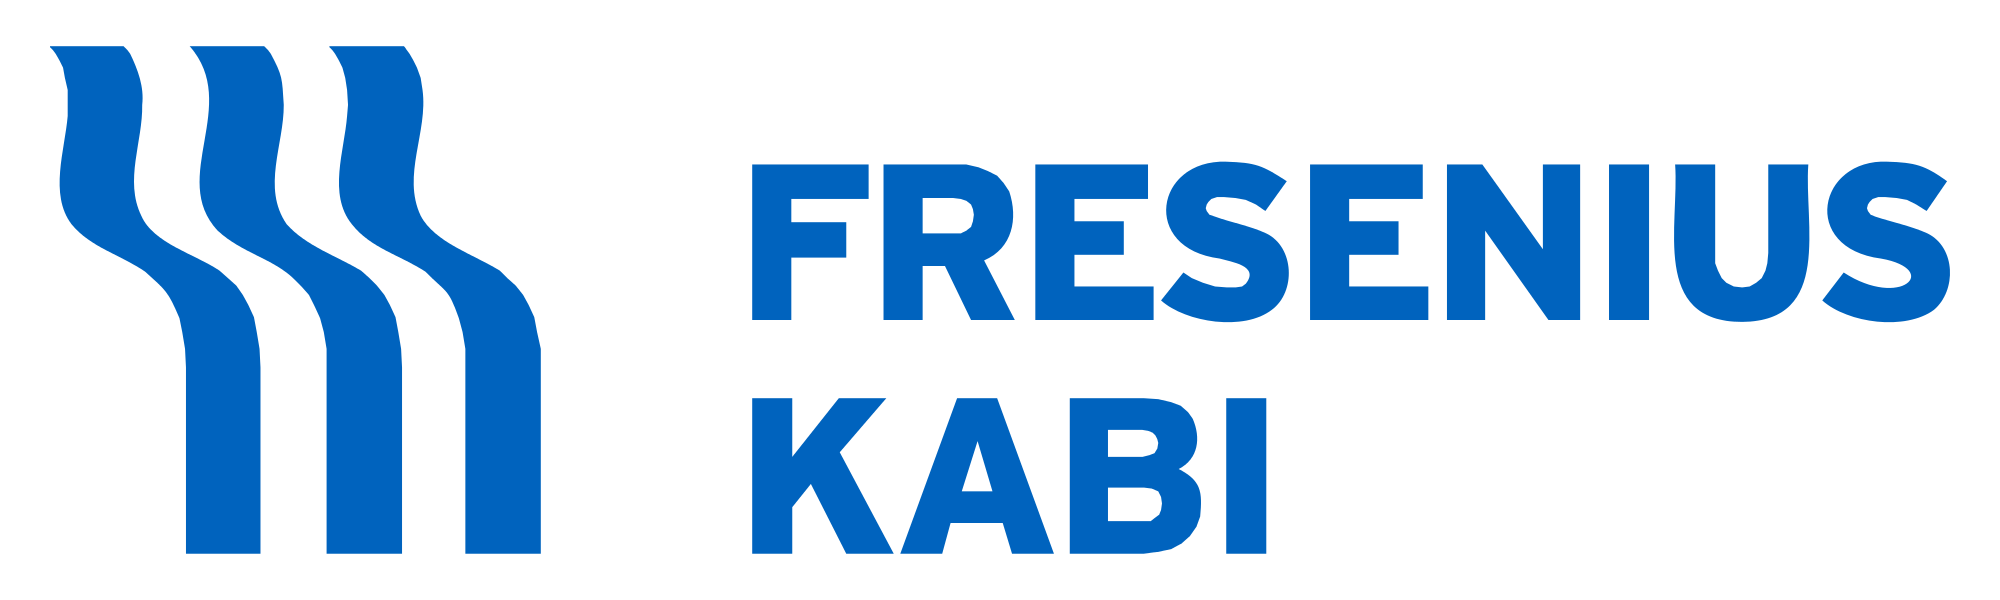 IT-tekniker till Fresenius Kabi